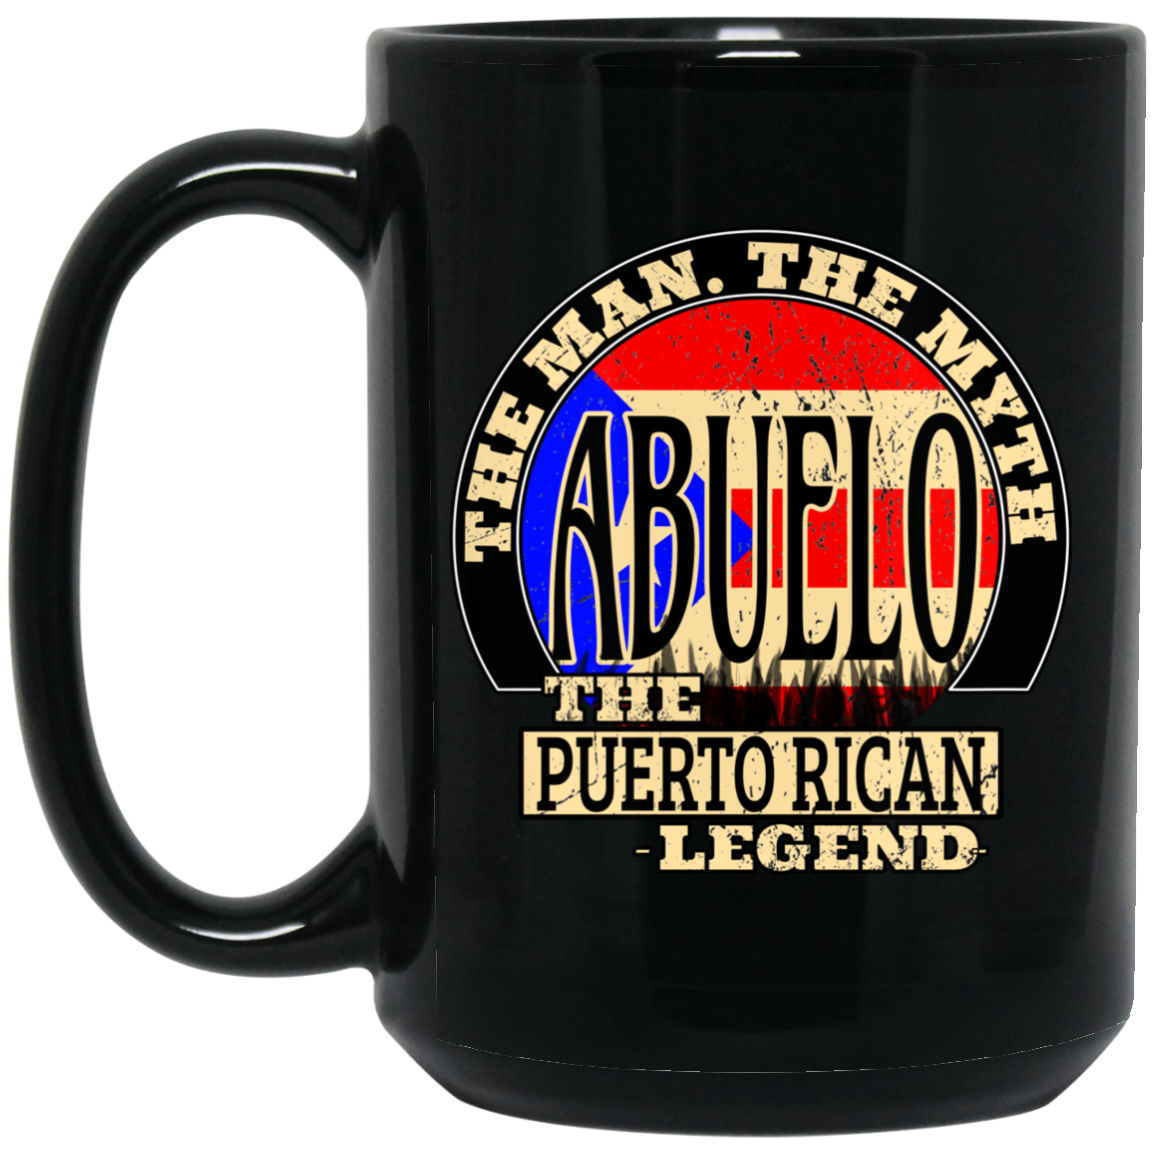 Abuelo The Legend 15 oz. Black Mug - Puerto Rican Pride